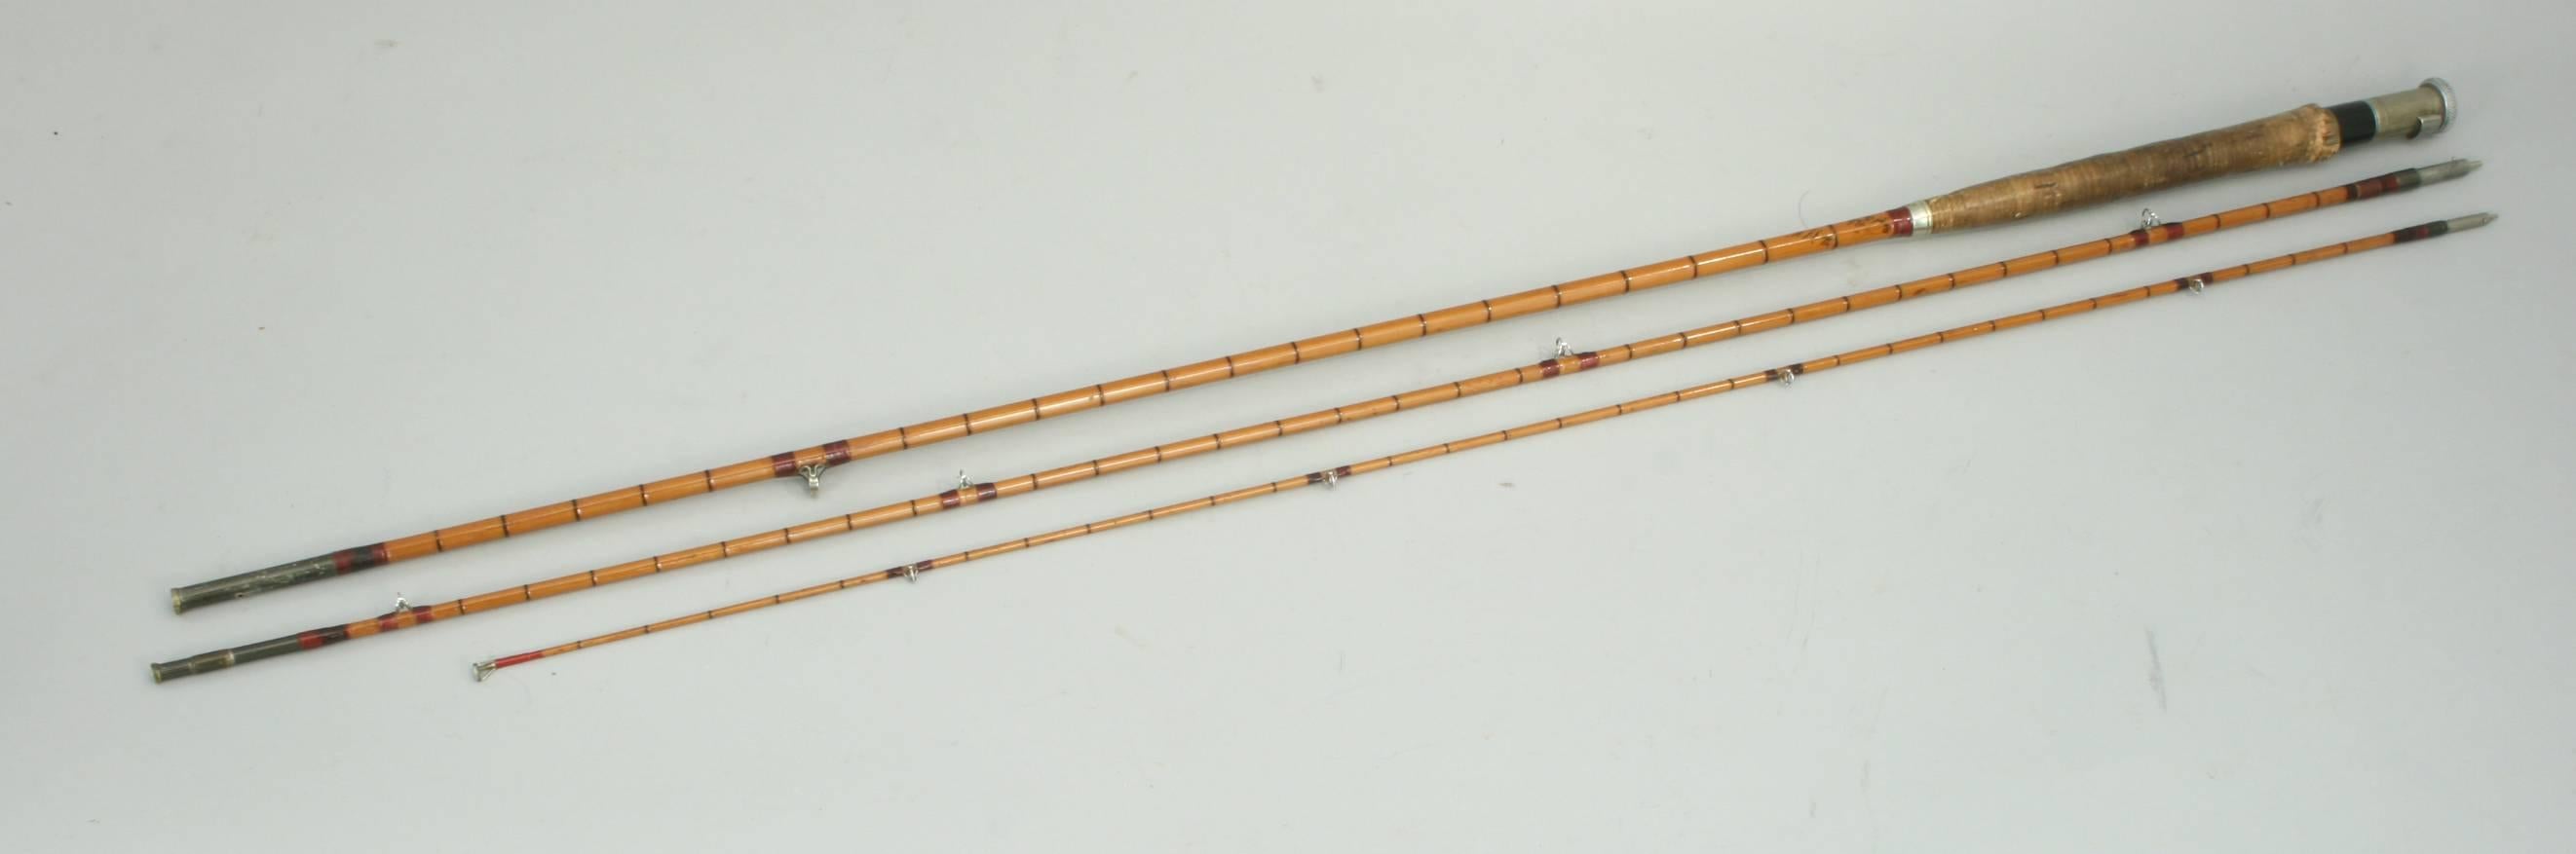 British Hardy Fly Fishing Rod